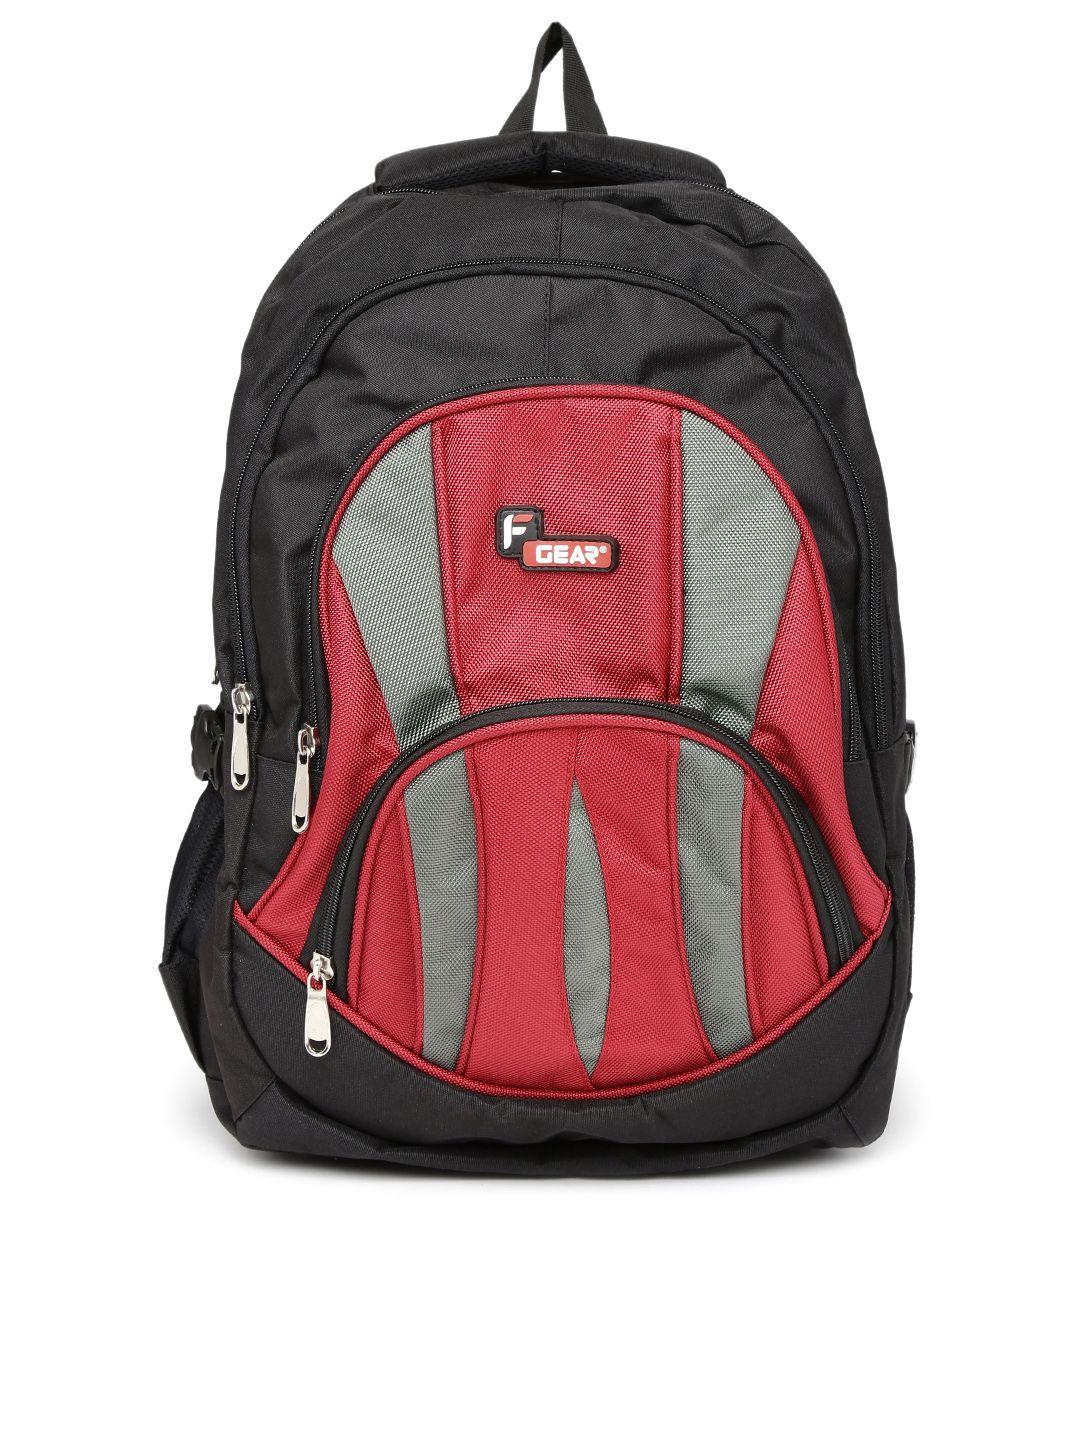 f gear unisex black & red adios backpack